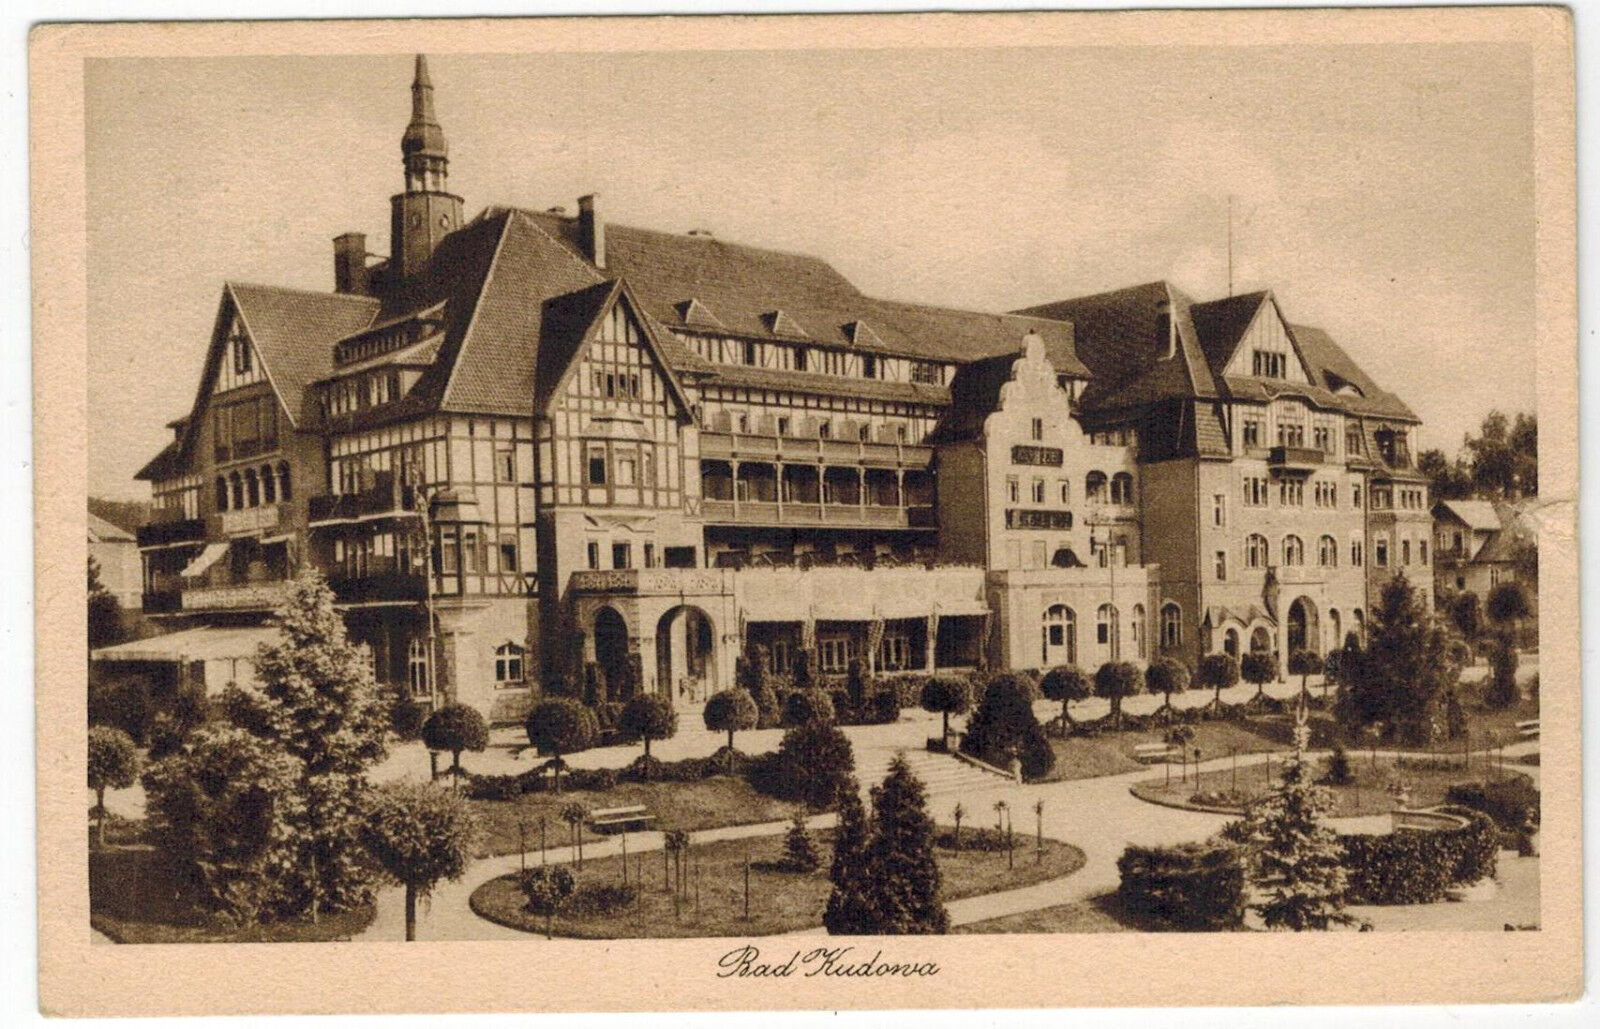 View from Bad Kudowa/Kudowa-Zdroj, Germany/Poland, 1920s (1)